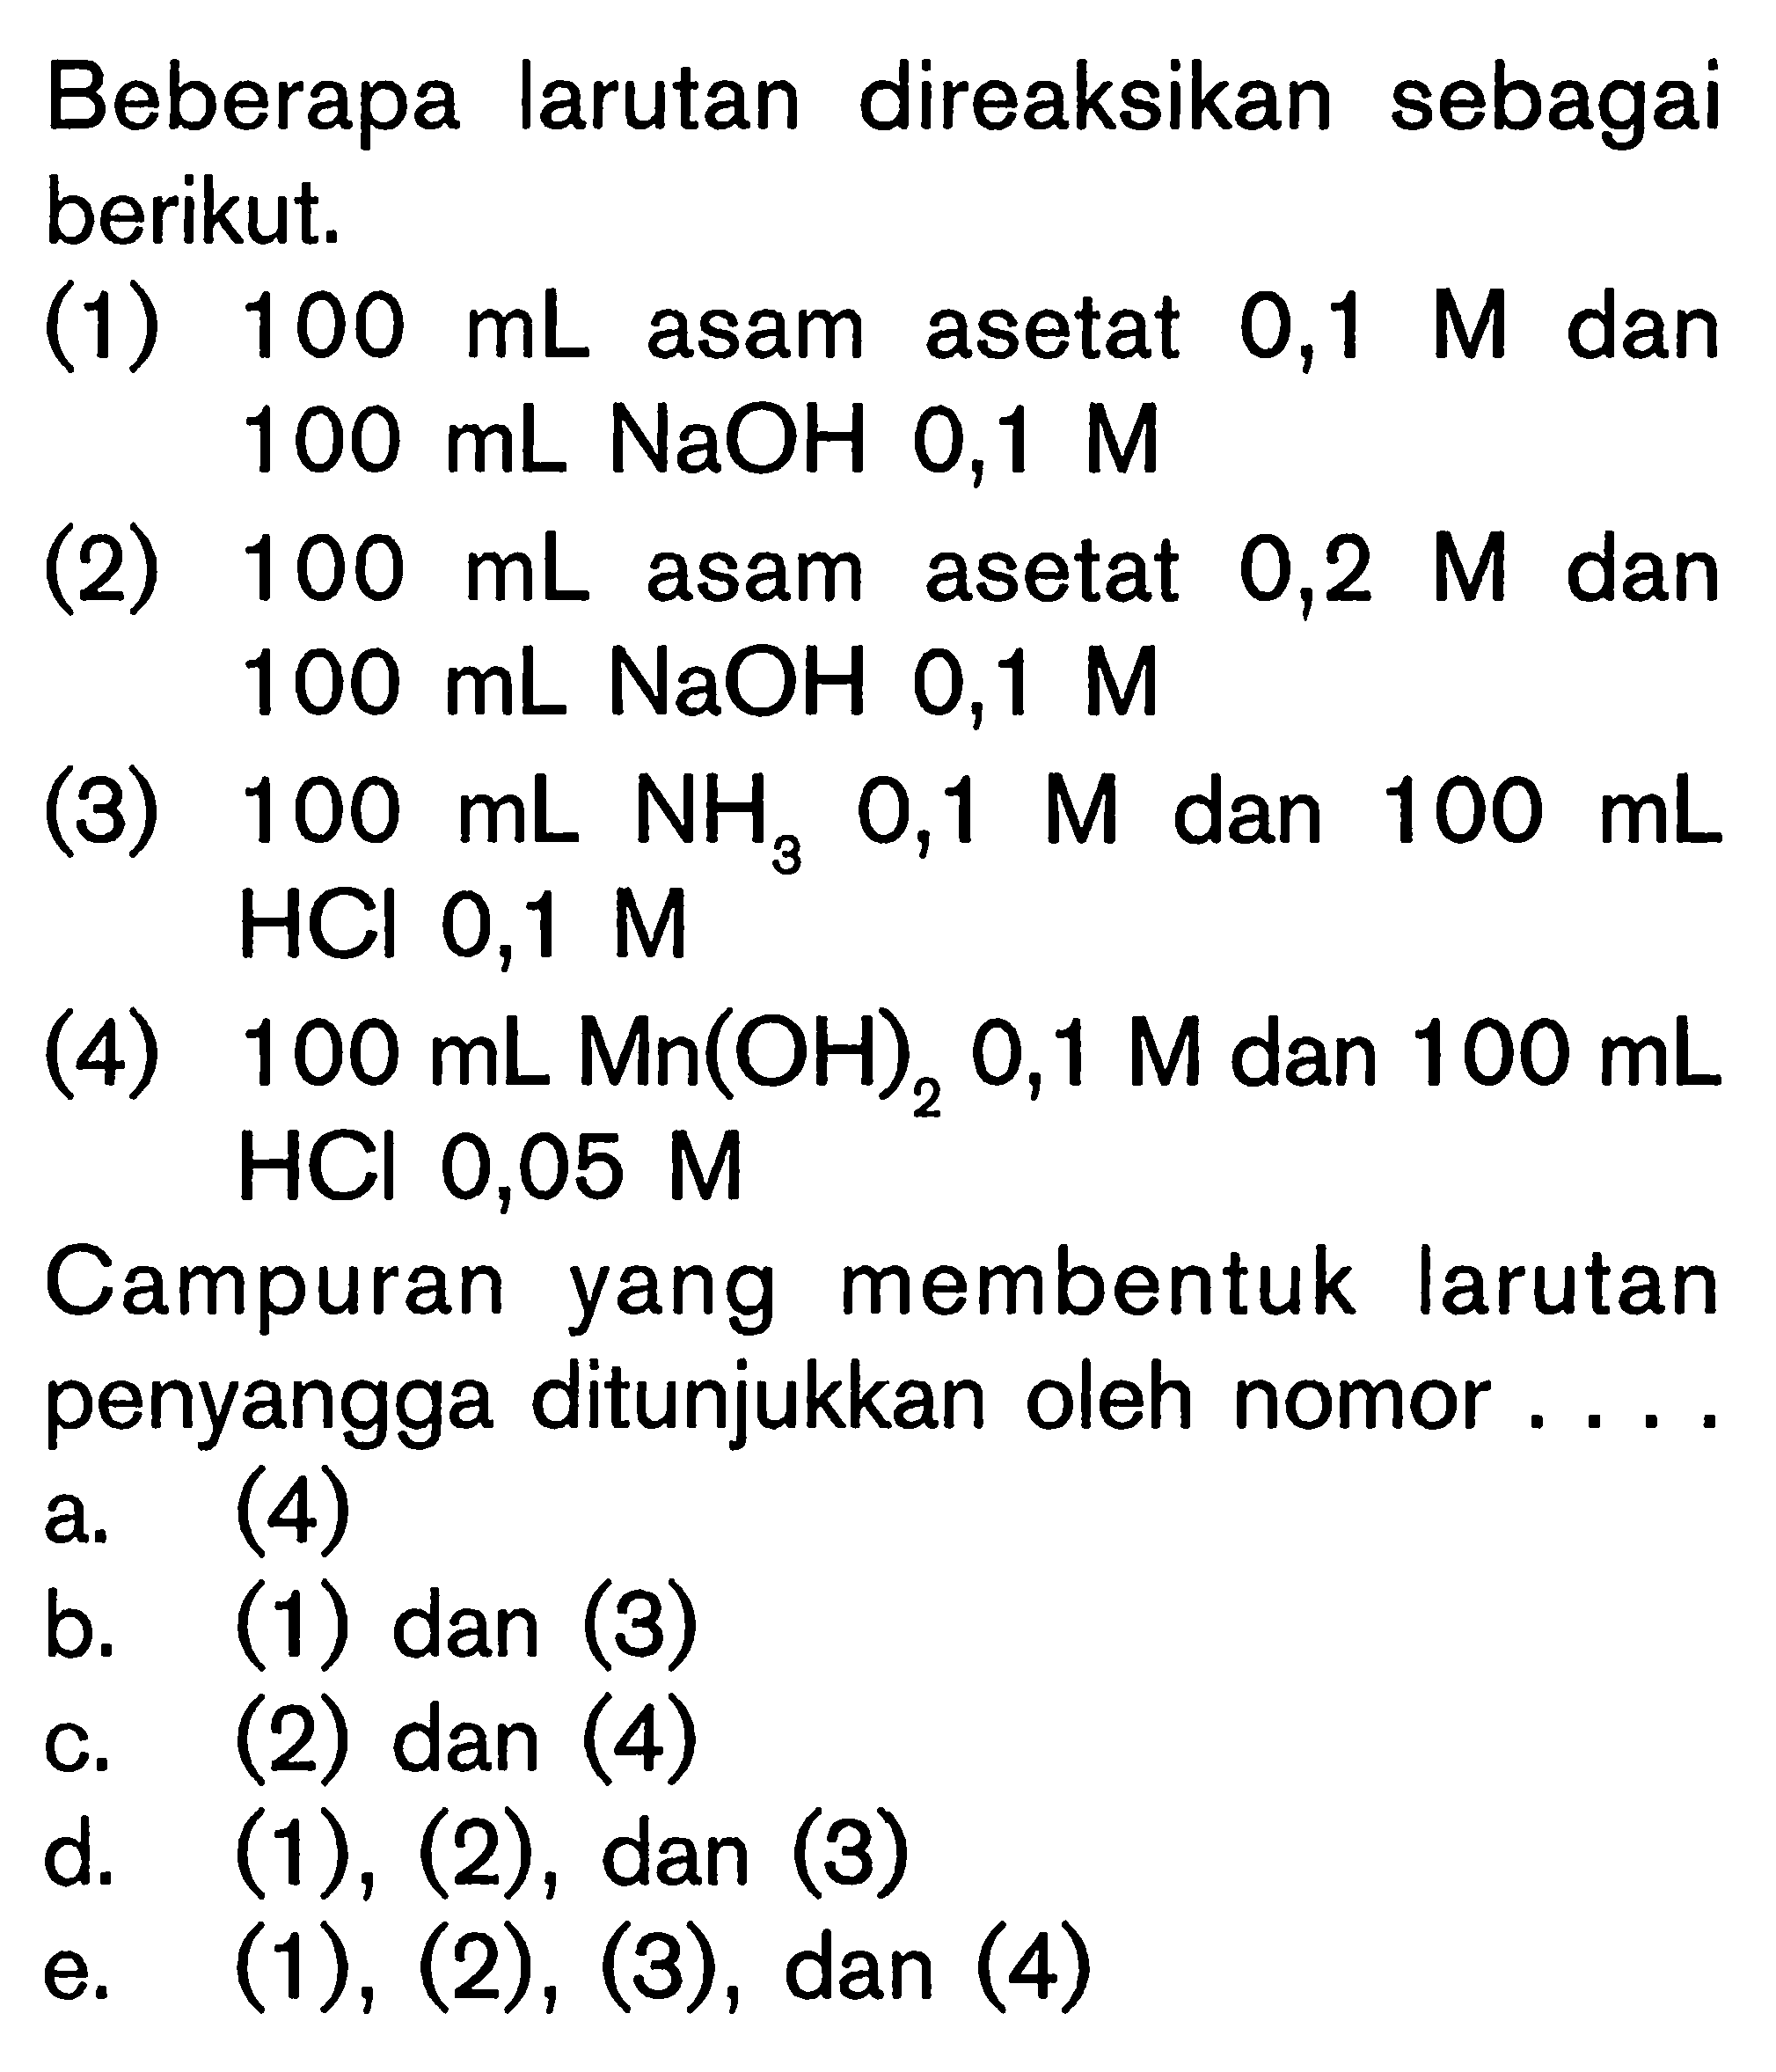 Beberapa larutan direaksikan sebagai berikut.(1)  100 mL  asam asetat  0,1 M  dan  100 mL NaOH 0,1 M (2)  100 mL  asam asetat  0,2 M  dan  100 mL NaOH 0,1 M (3)  100 mL NH3 0,1 M  dan  100 mL  HCl  0,1 M (4)  100 mL Mn(OH)2 0,1 M  dan  100 mL  HCl  0,05 M Campuran yang membentuk larutan penyangga ditunjukkan oleh nomor....